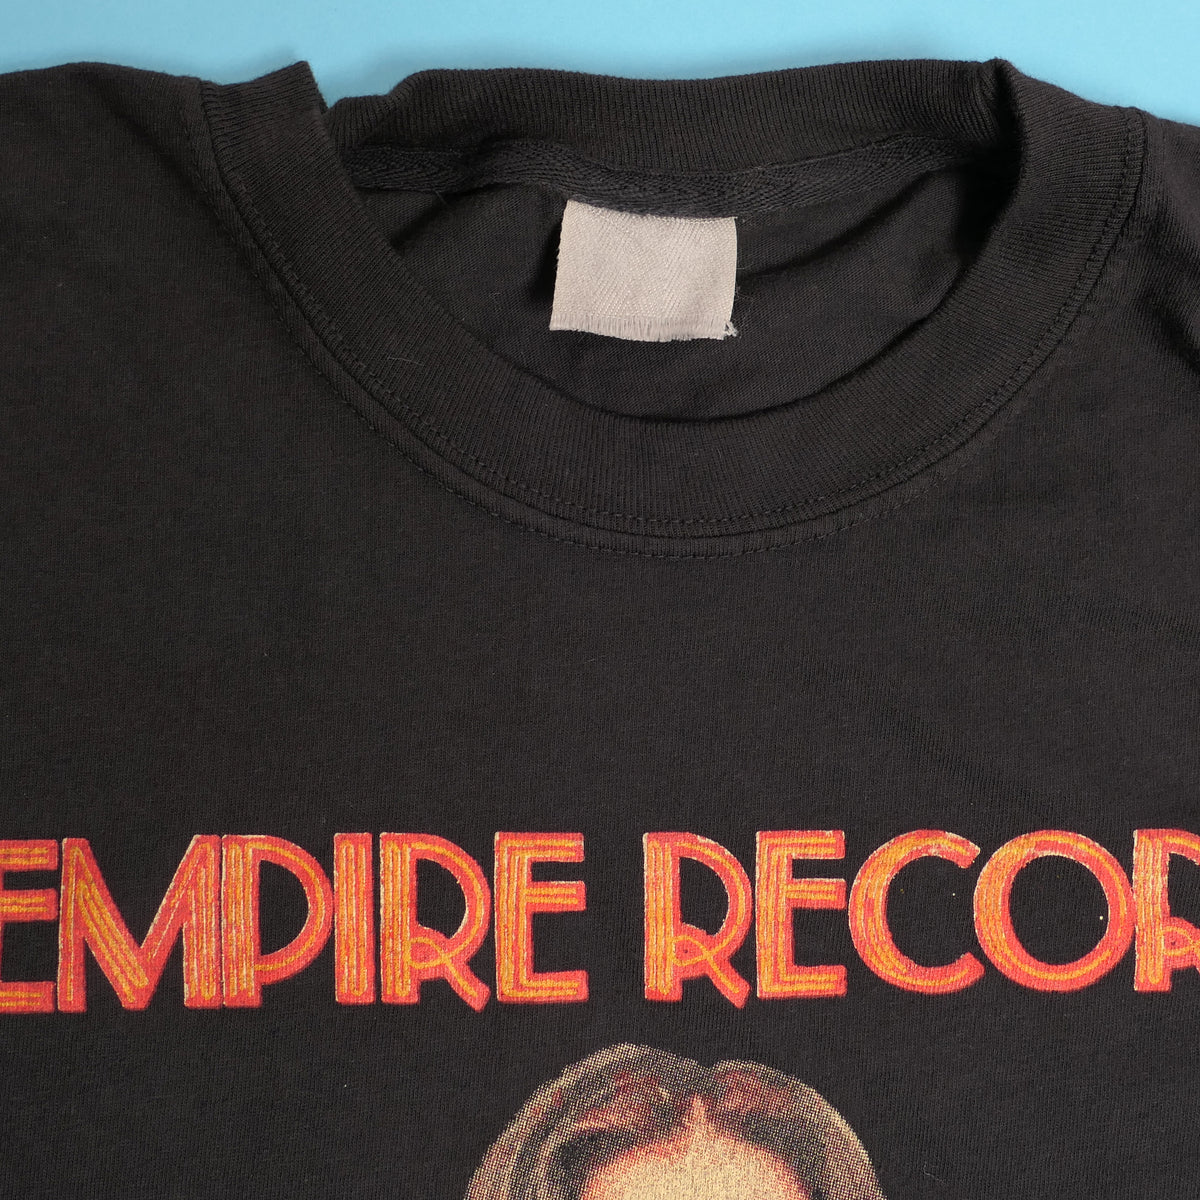 Empire Records Tee